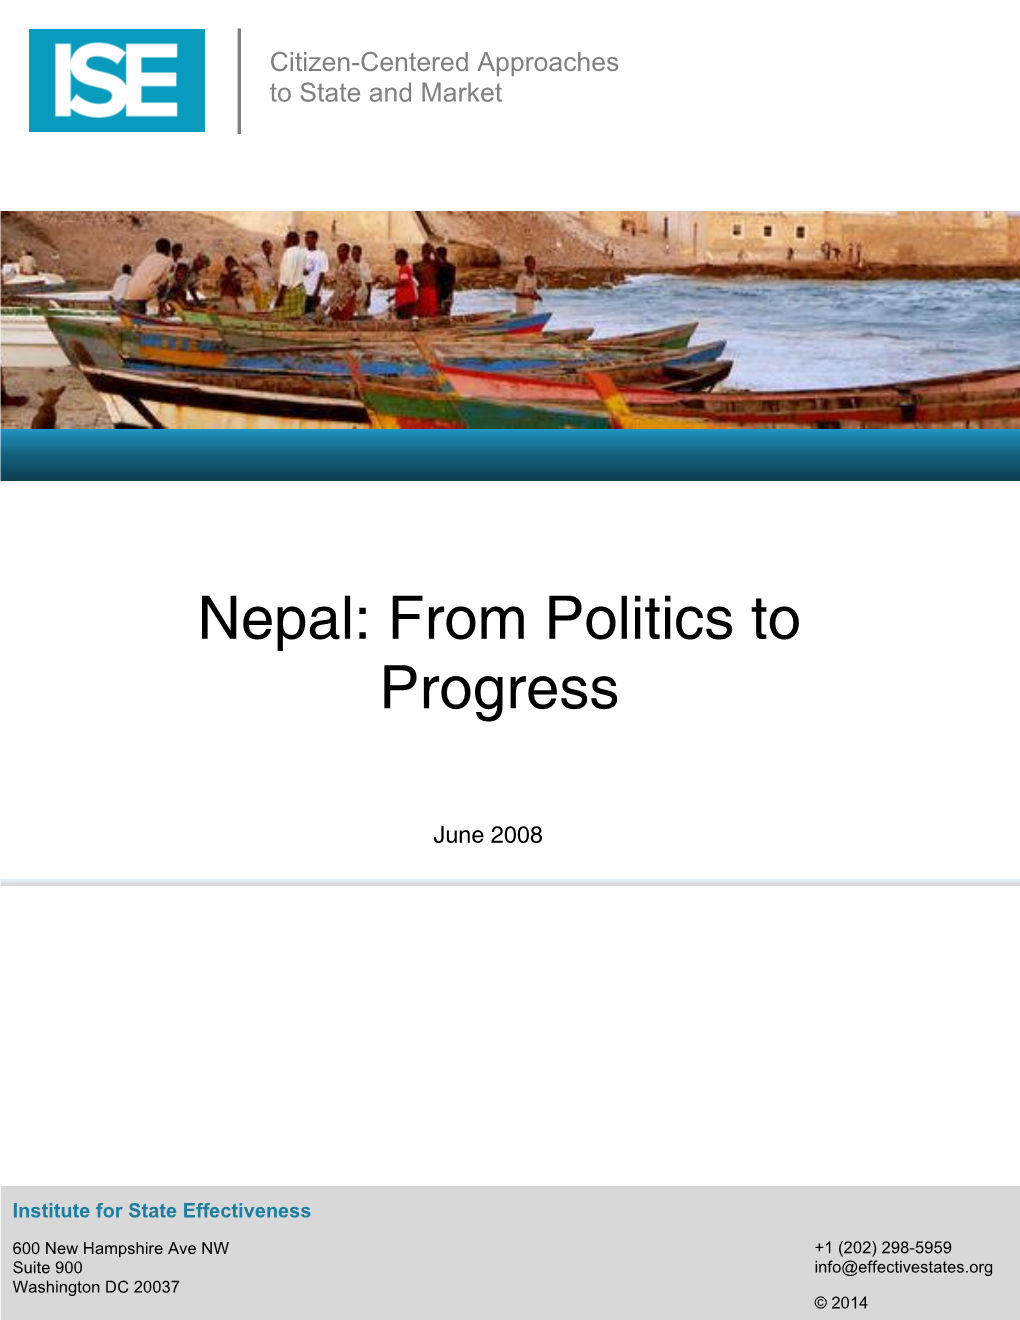 Nepal: from Politics to Progress